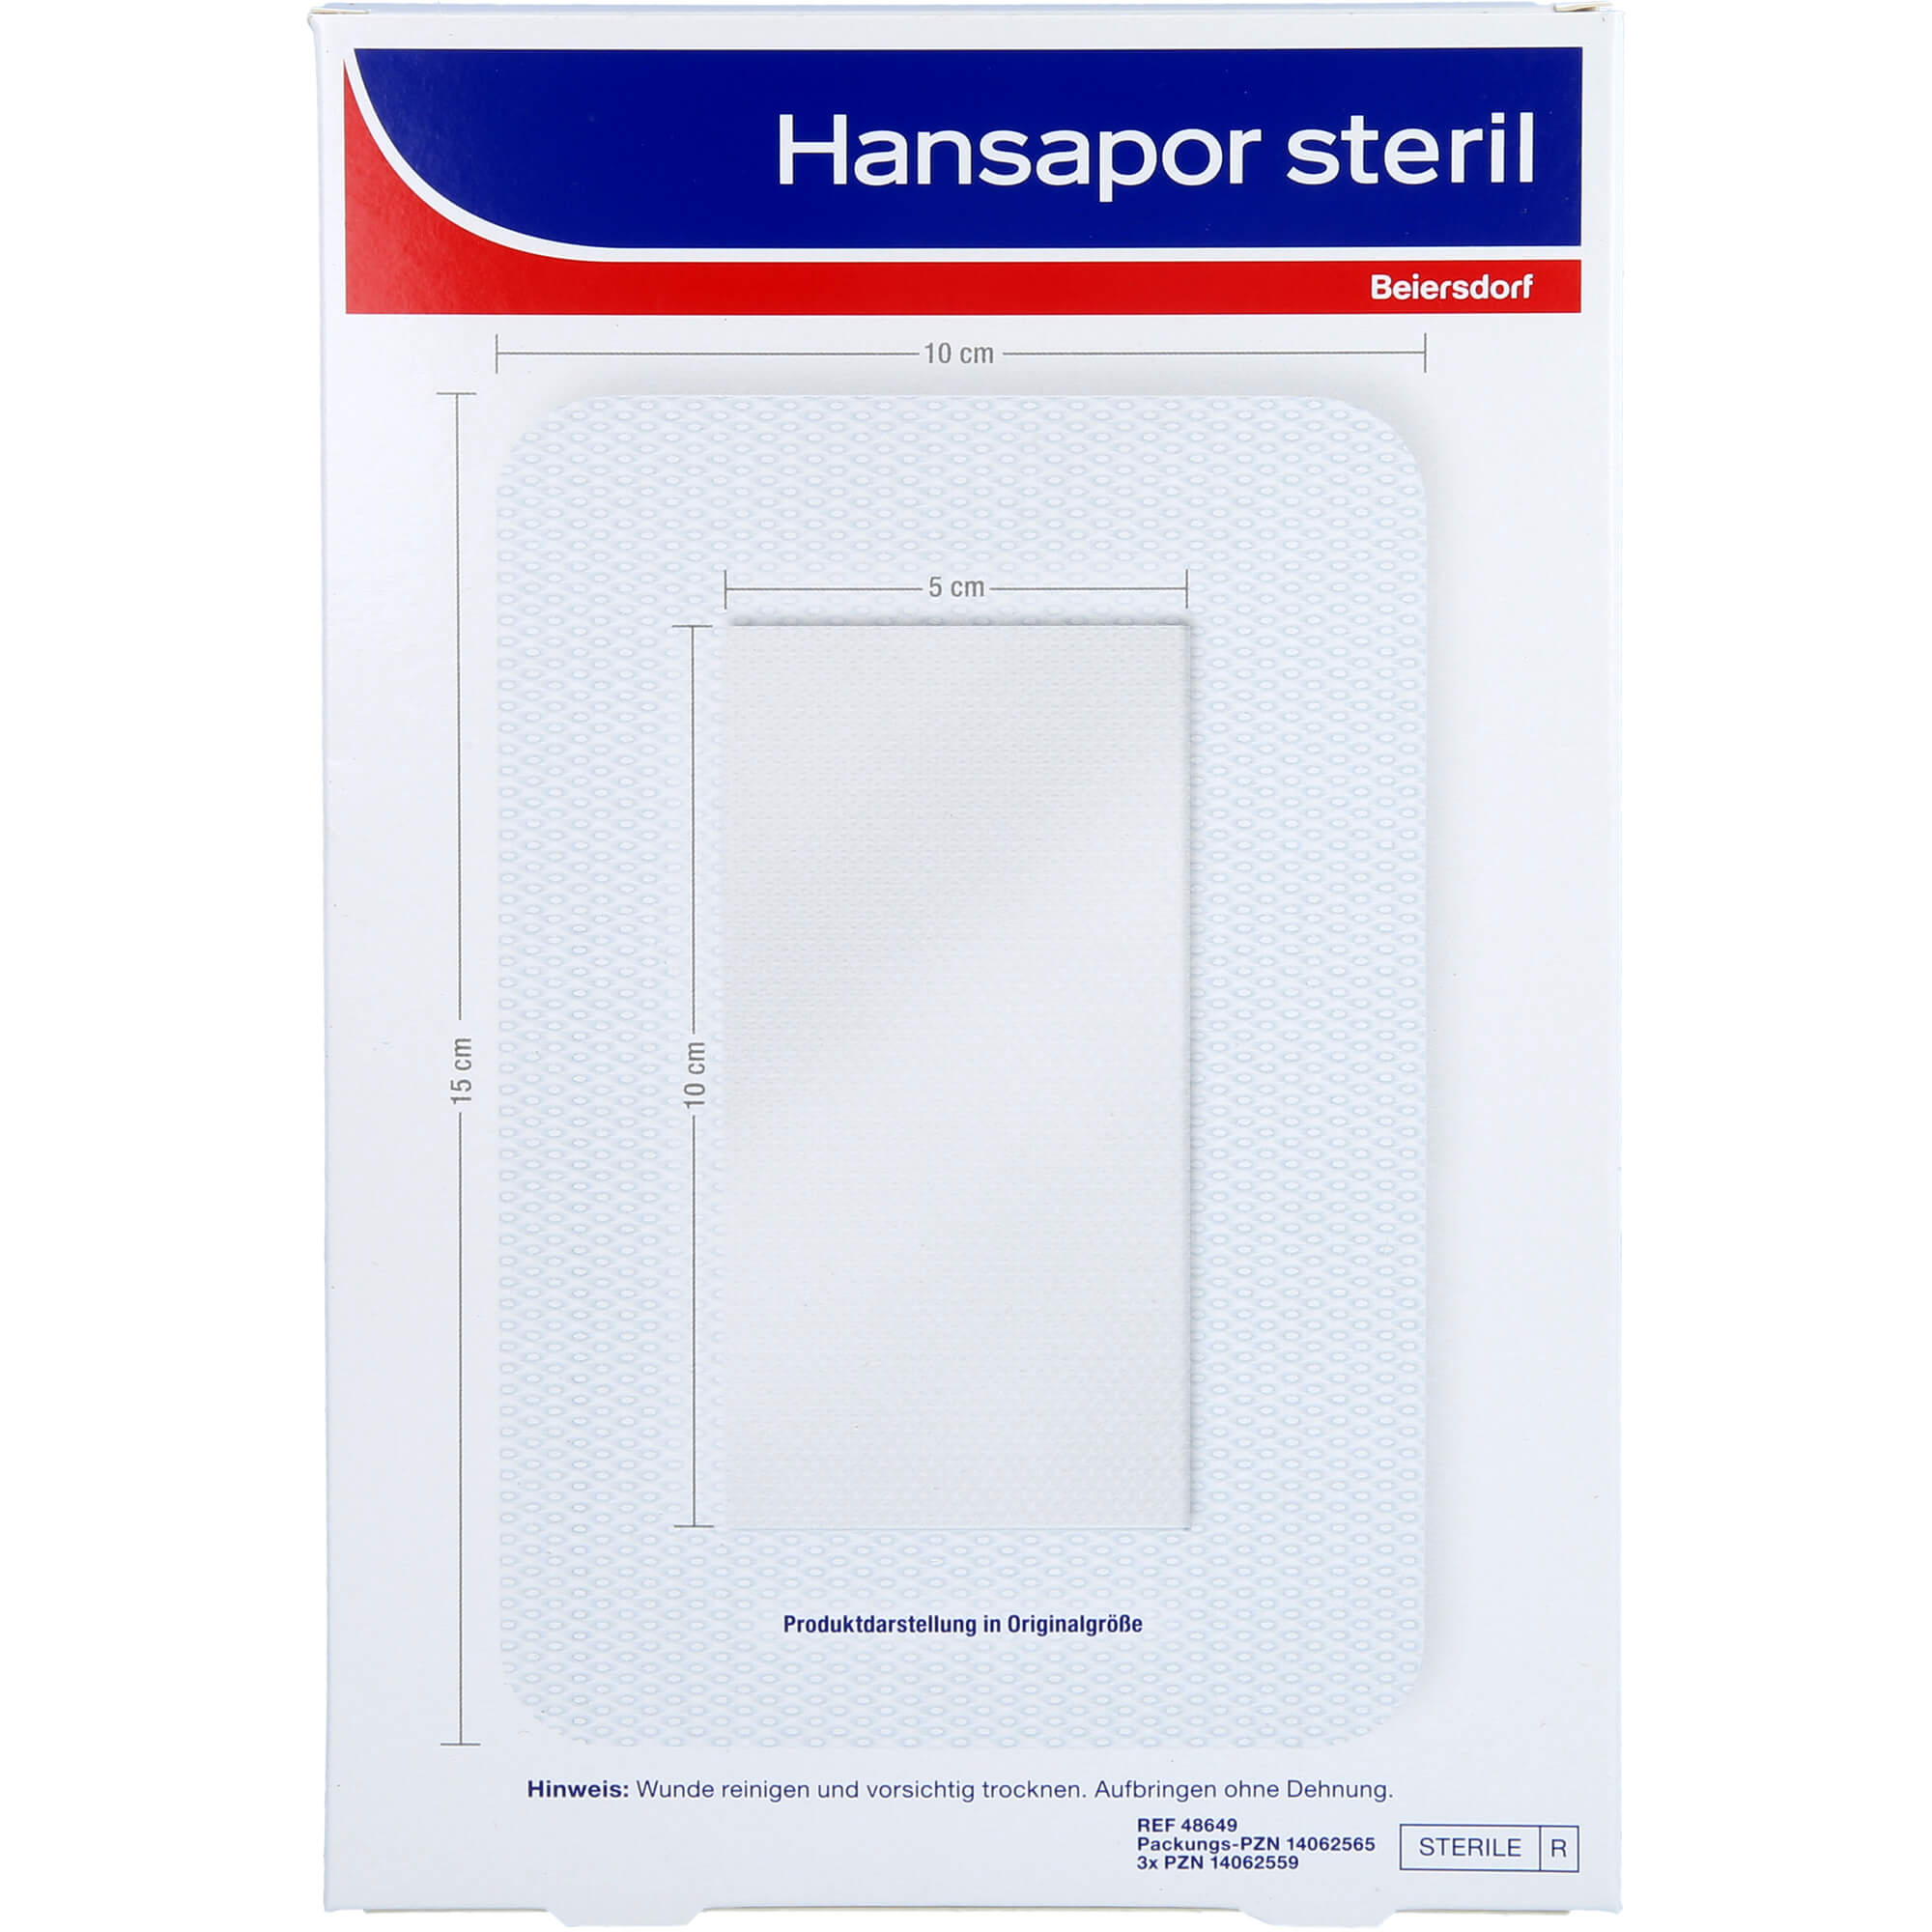 HANSAPOR steril Wundverband 10x15 cm